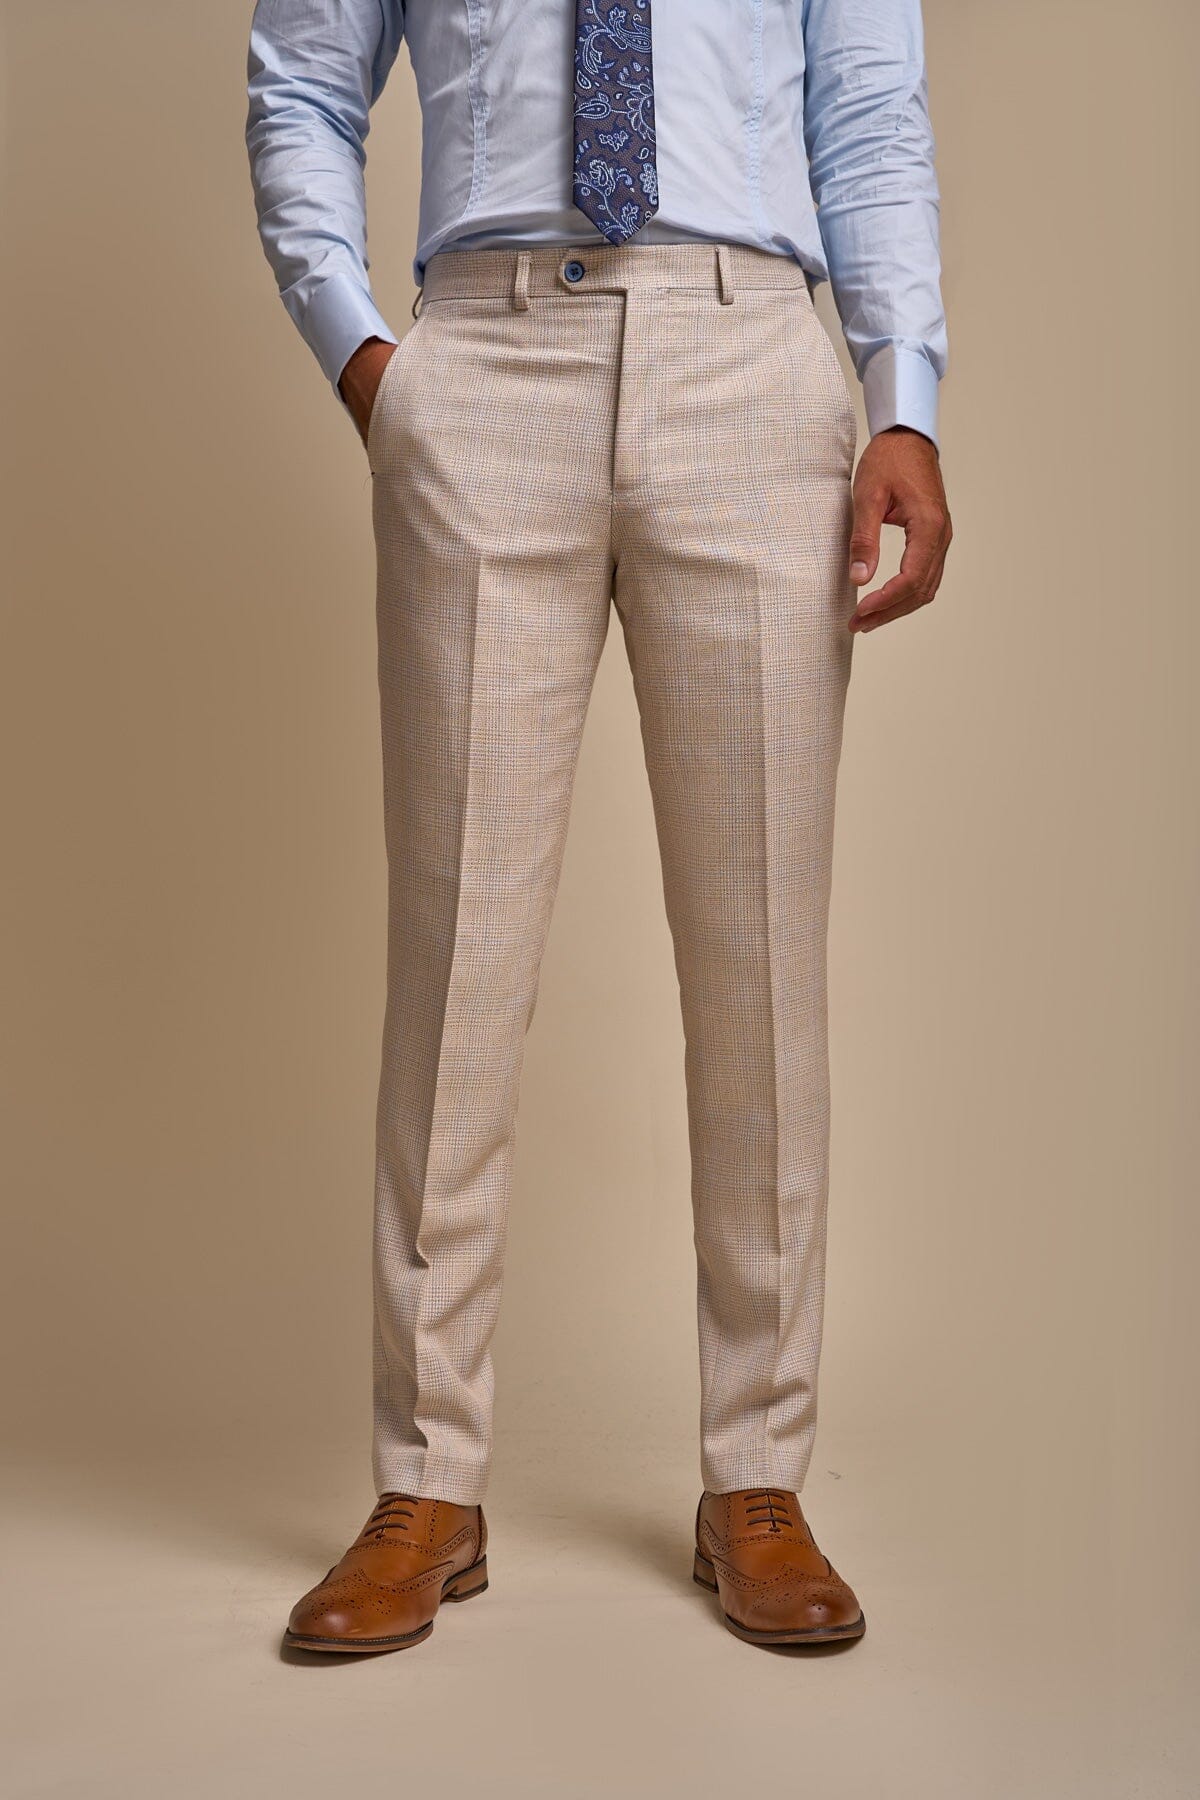 Caridi Beige Tweed Trousers - Trousers - 28R 